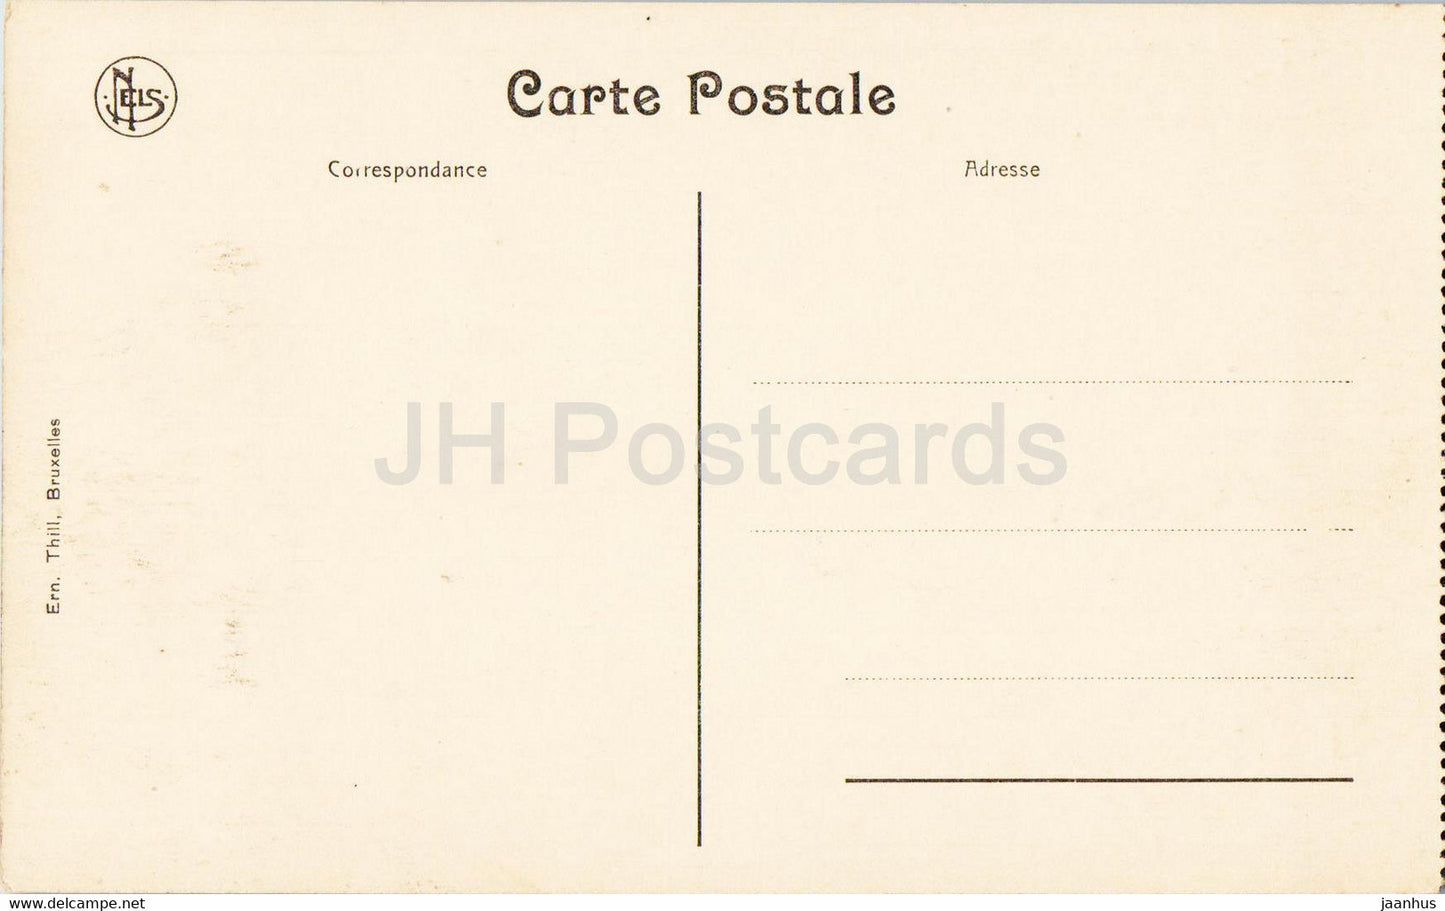 Ruines de Louvain - Rue de Diest - Dieststraße - Erster Weltkrieg - Militär - alte Postkarte - Belgien - unbenutzt